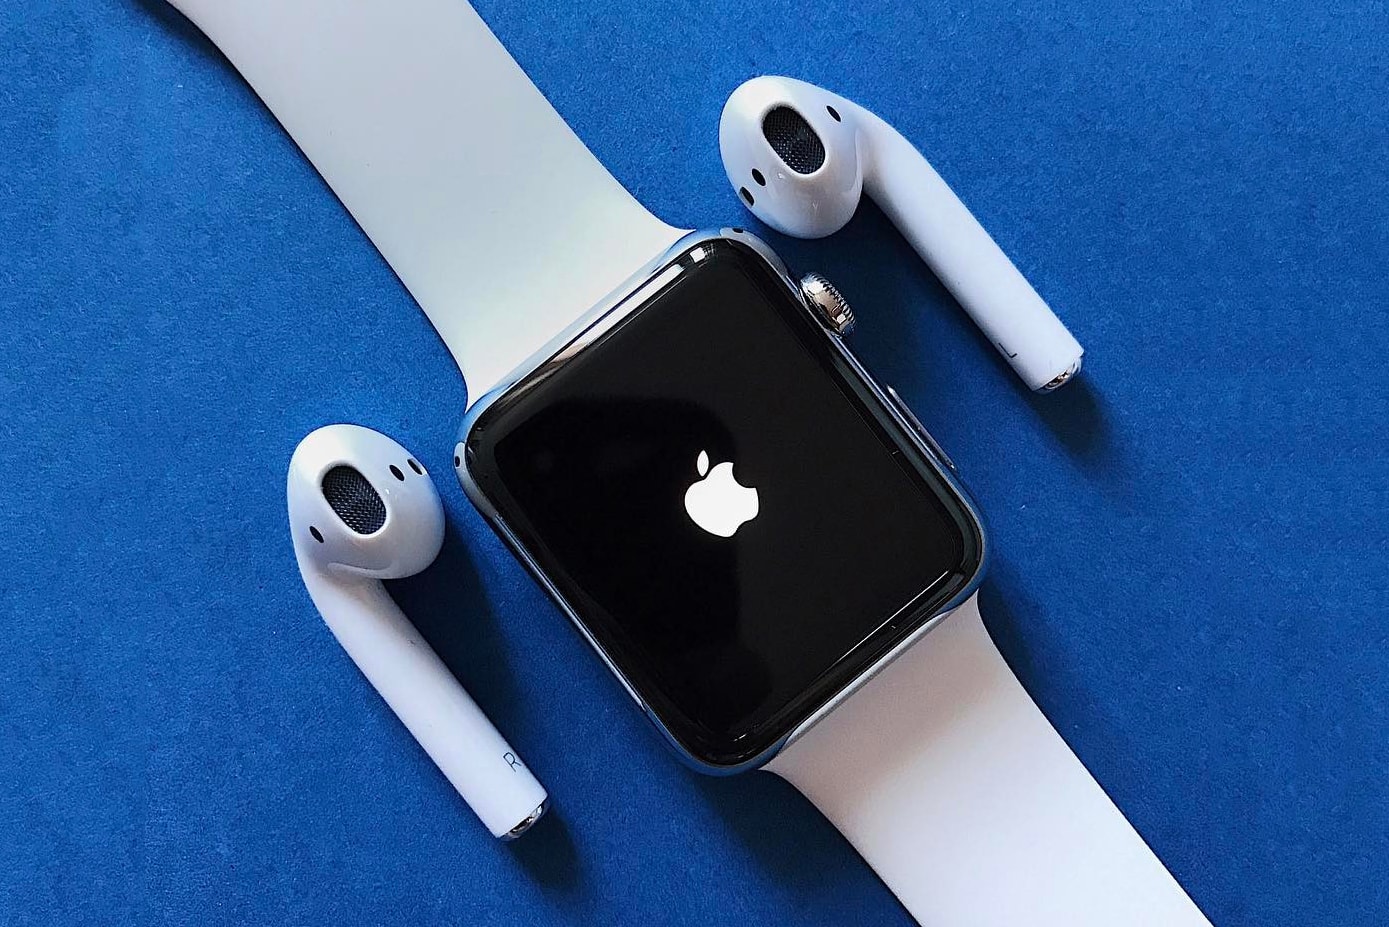 Apple Watch 走勢強勁 – Apple 超越小米及 Fitbit 成為全球最大穿戴式裝置生產商